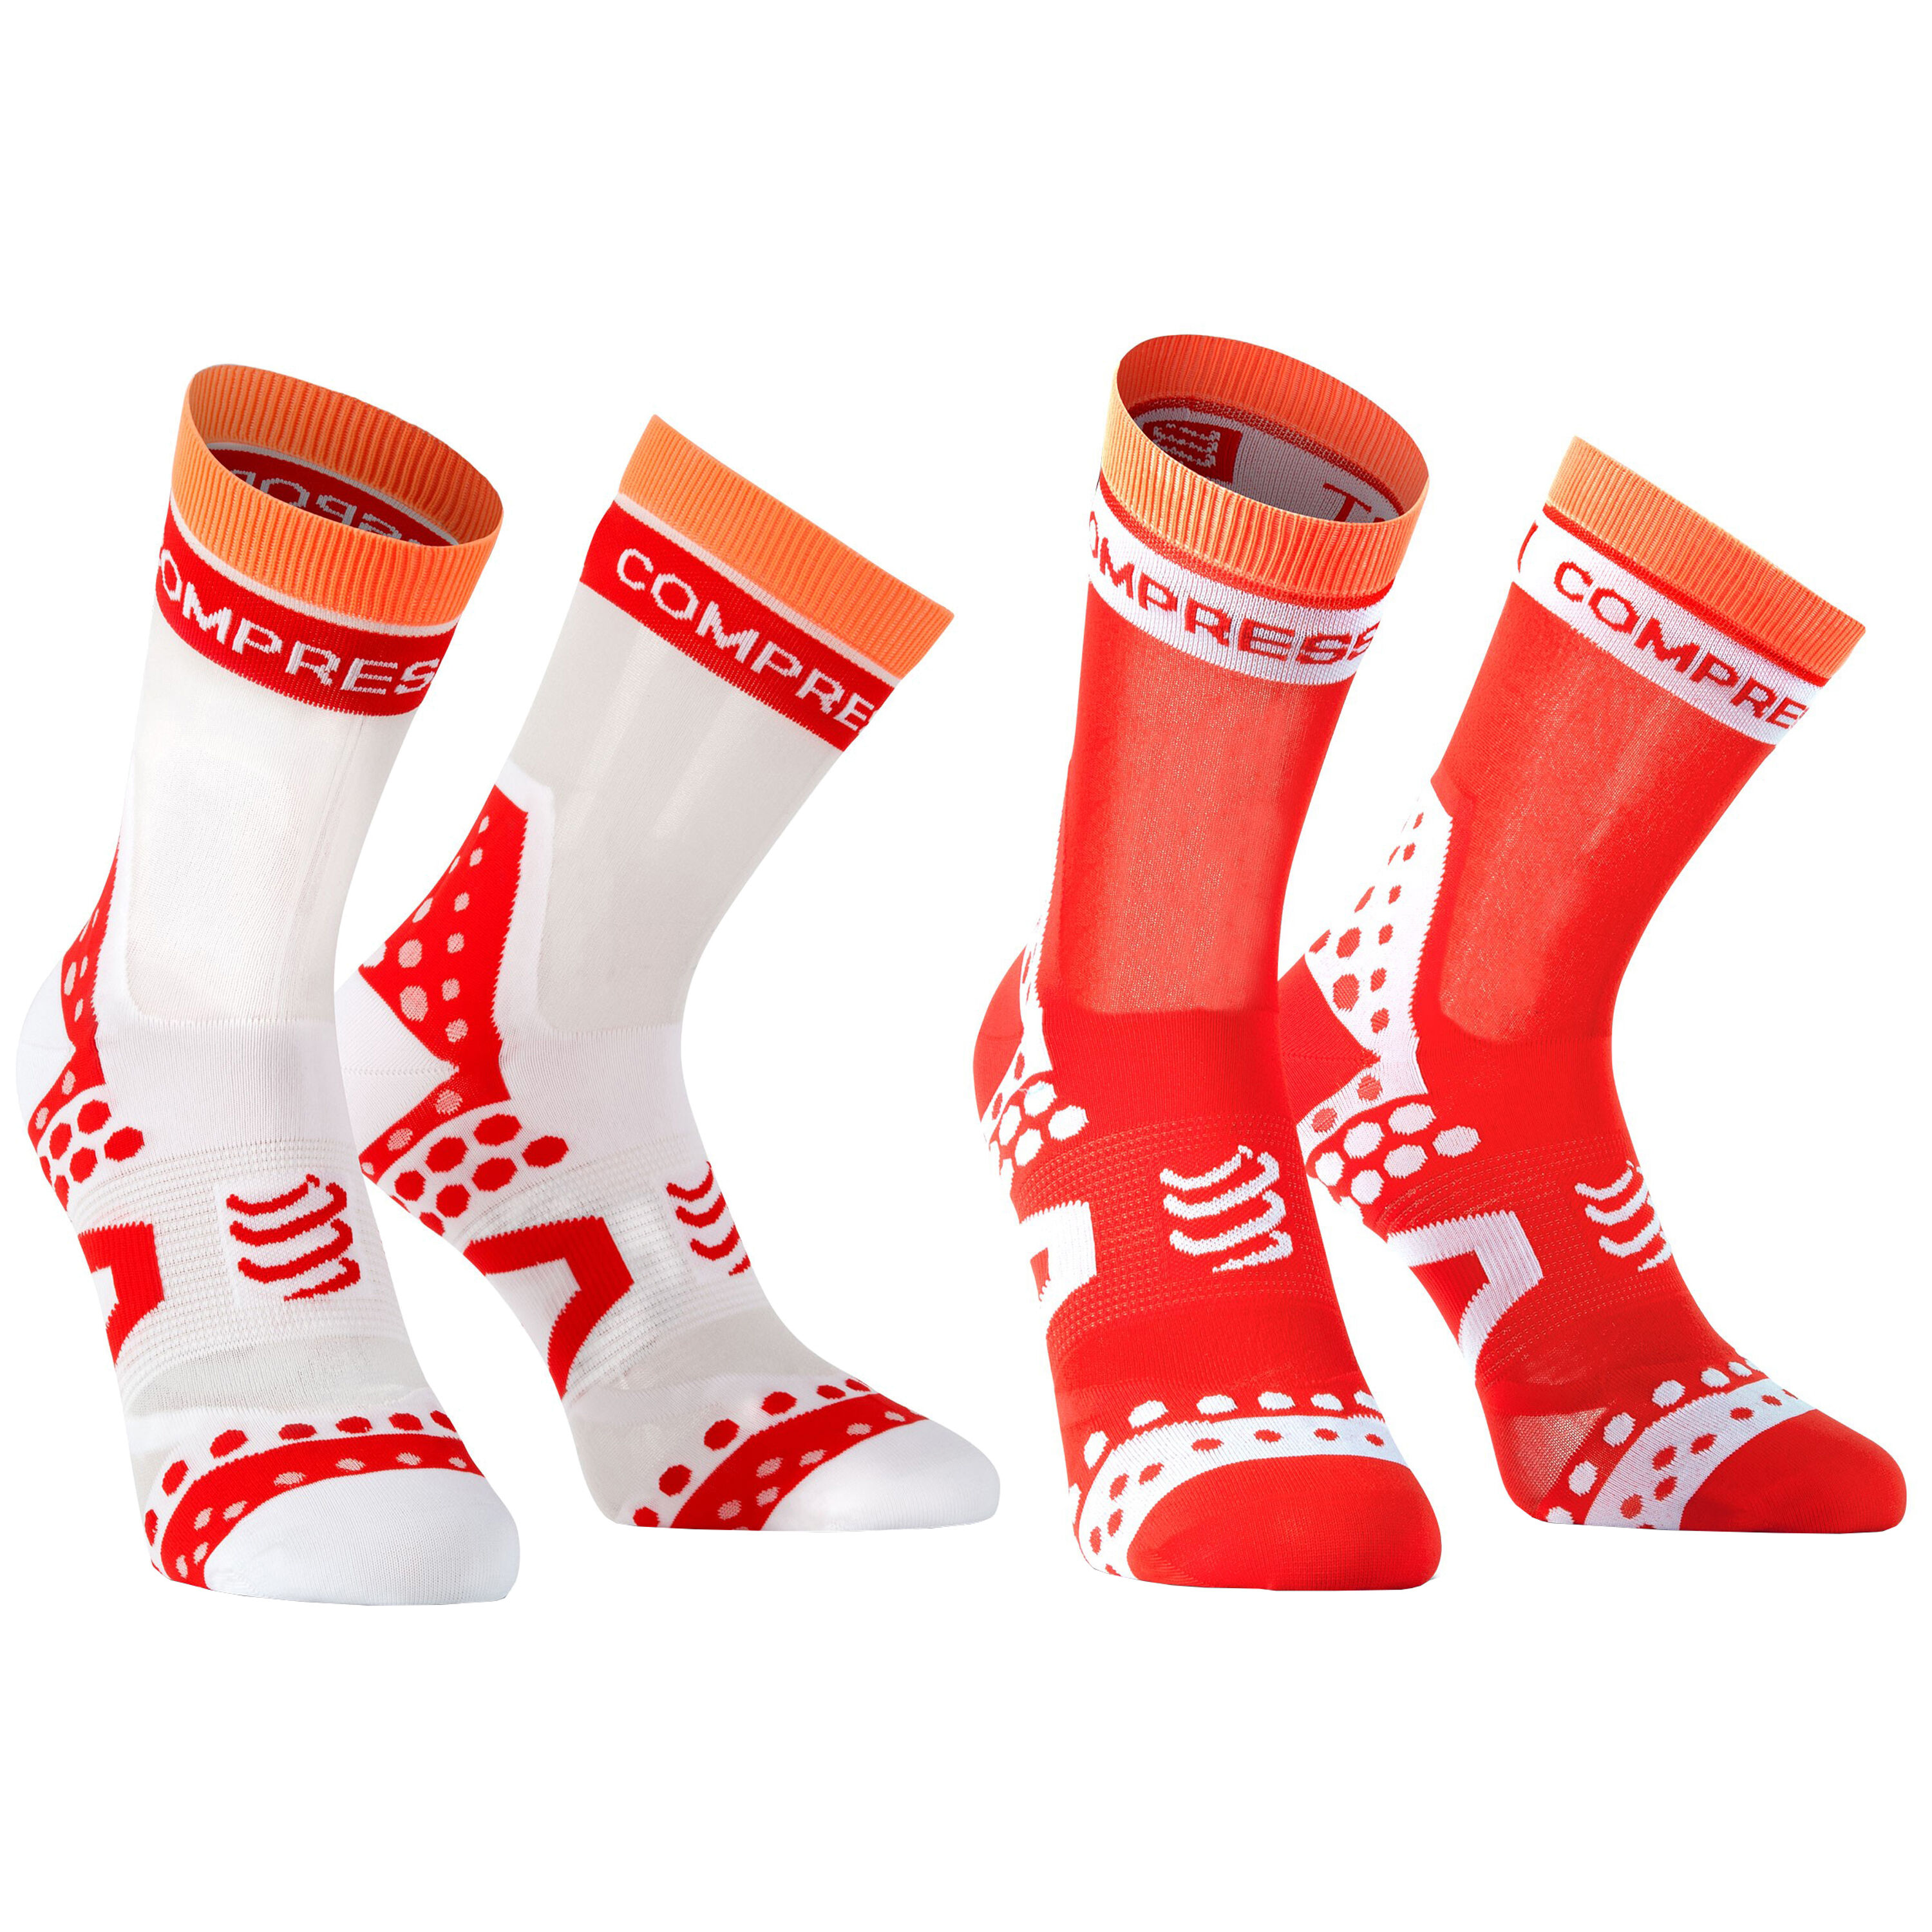 Compressport Pro Racing Socks Ultralight 12 g socks LordGun online bike ...